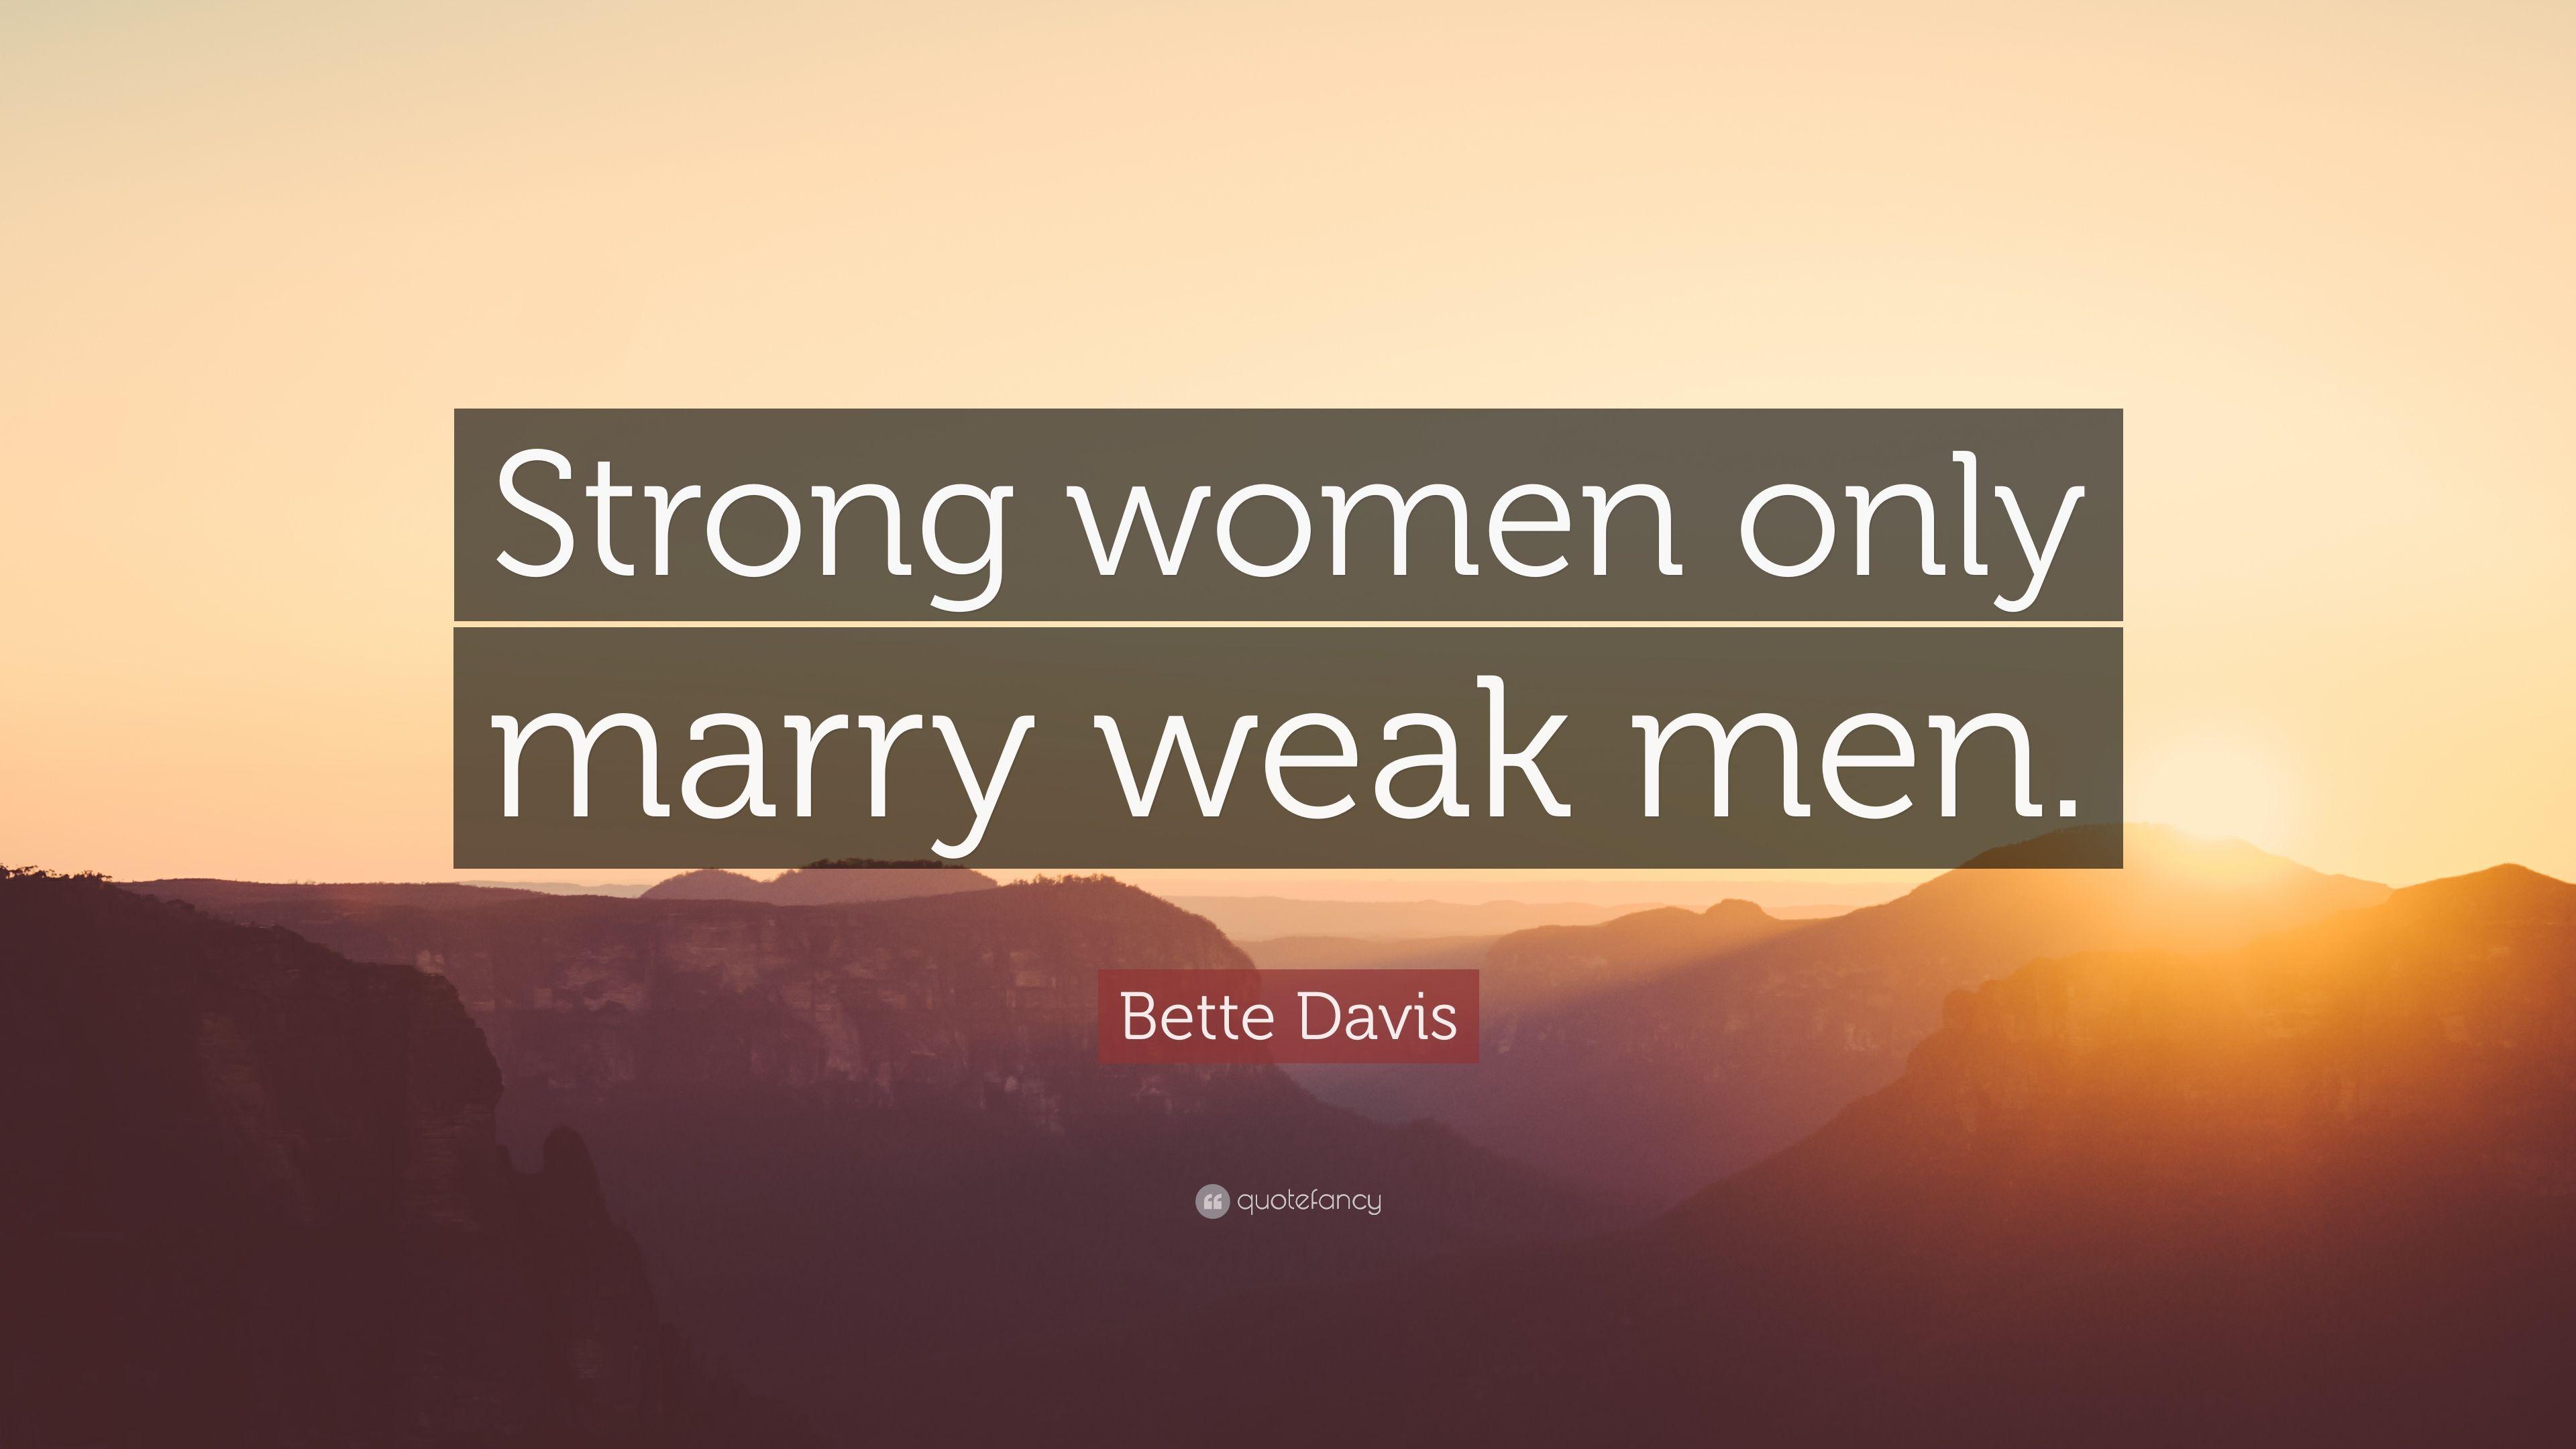 Bette Davis Quote: “Strong women only marry weak men.” 10